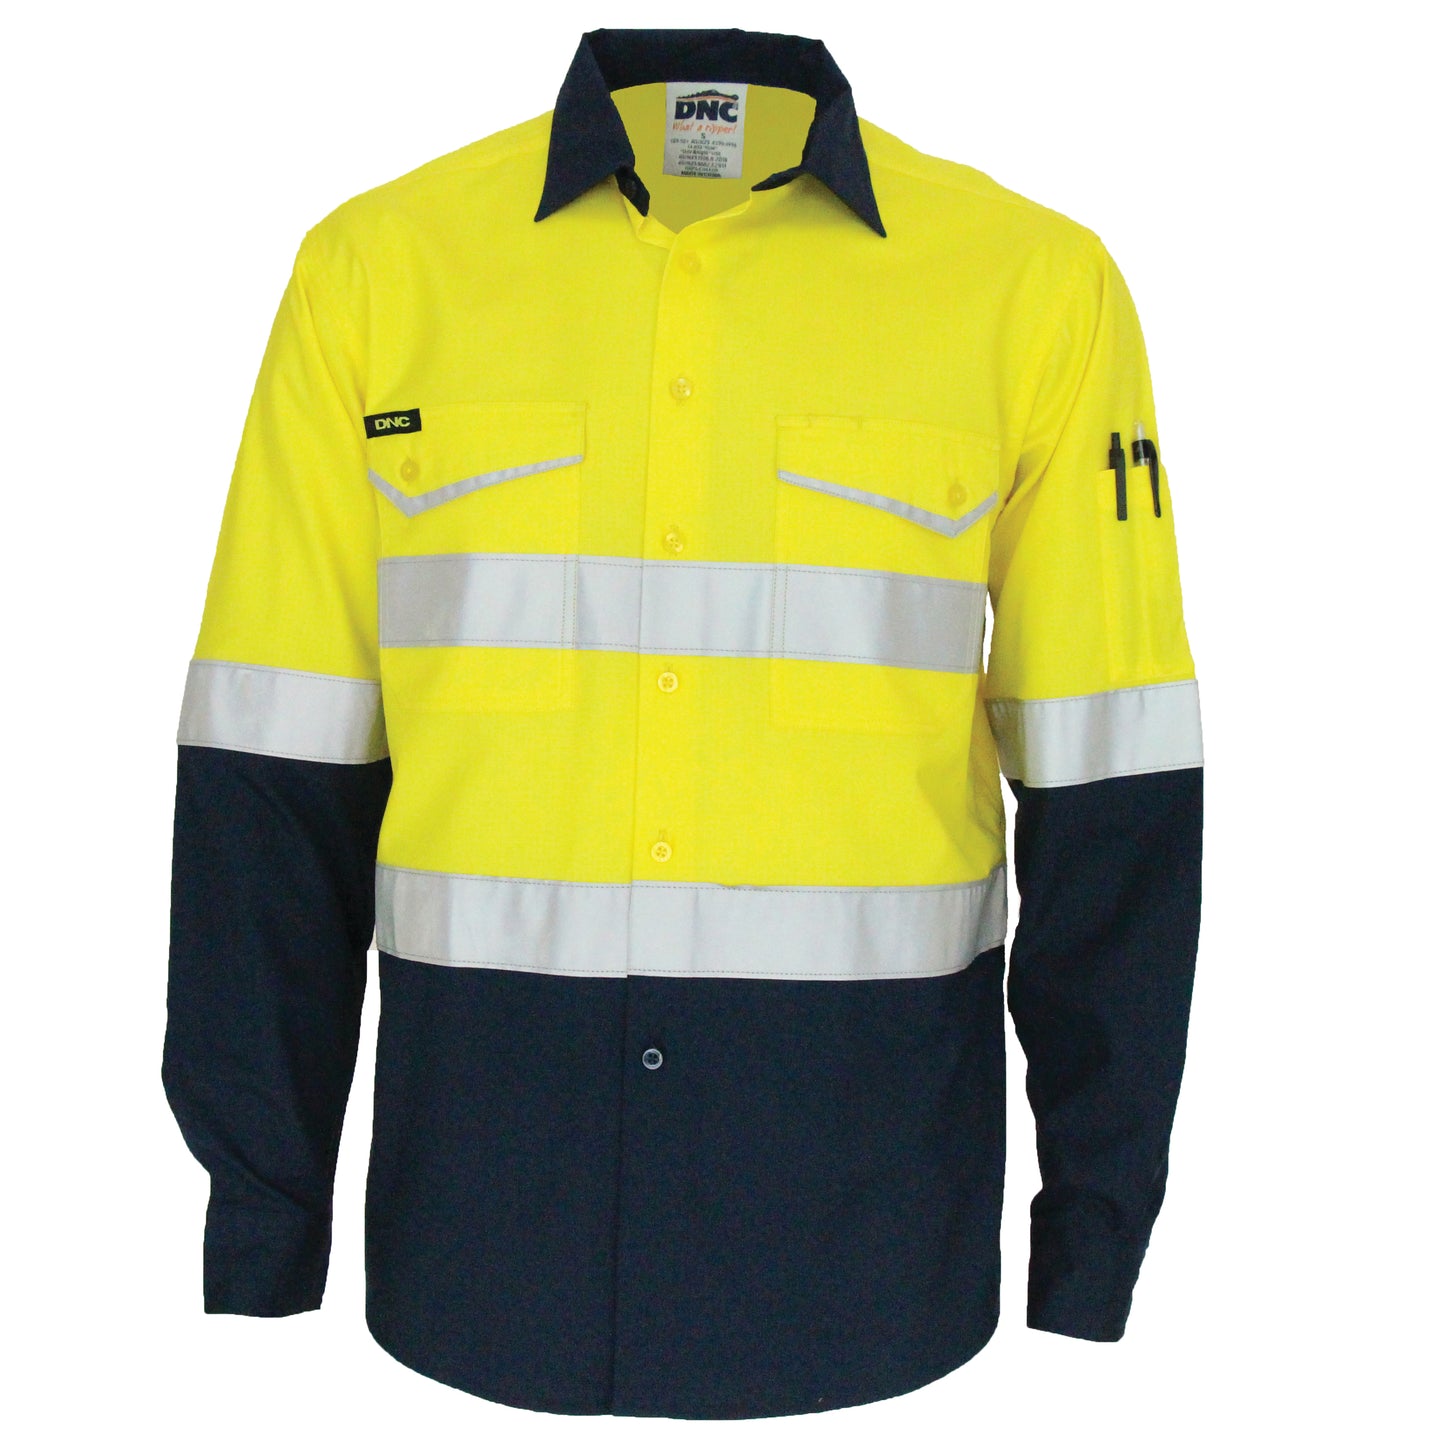 DNC Two-Tone RipStop Cotton Shirt with Reflective CSR Tape. L/S 3588 - Star Uniforms Australia